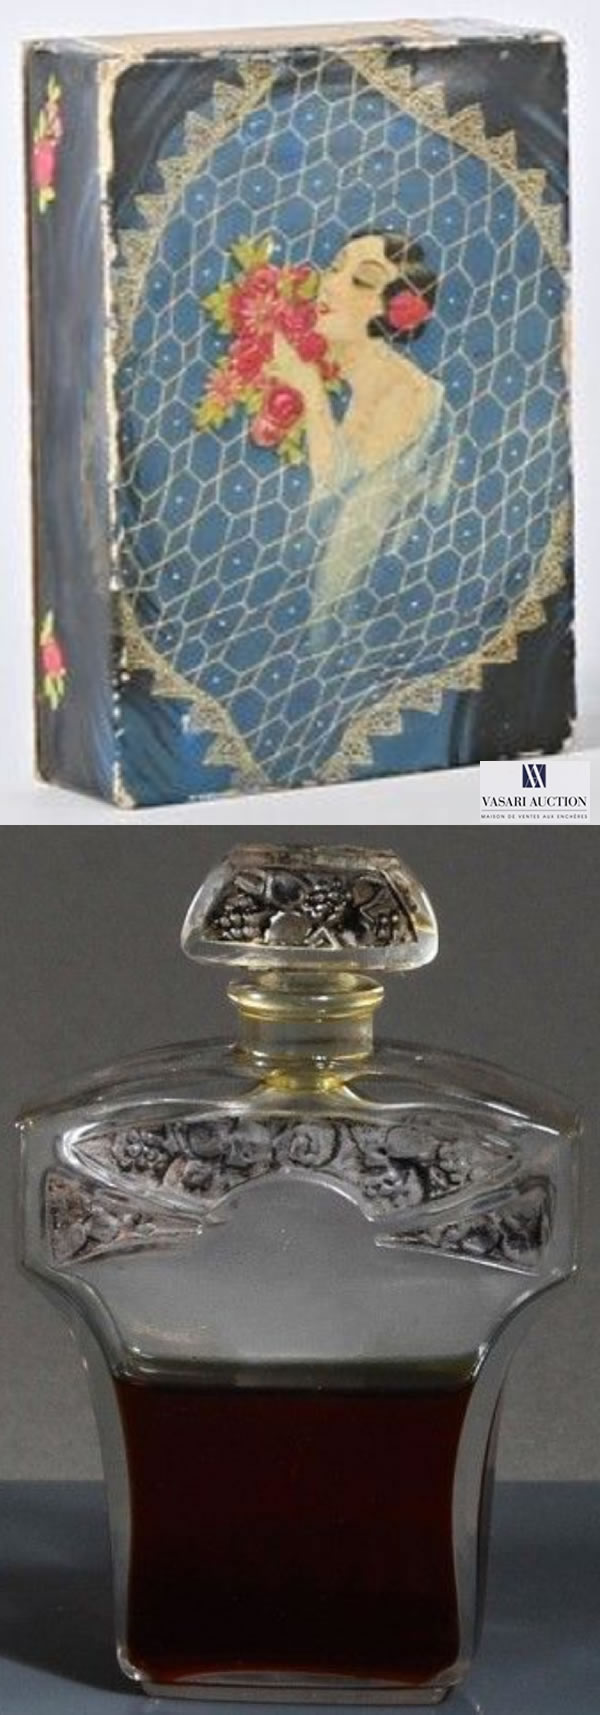 Isabey Early Senorita Box and Viard Perfume Bottle For A Travers La Voilette